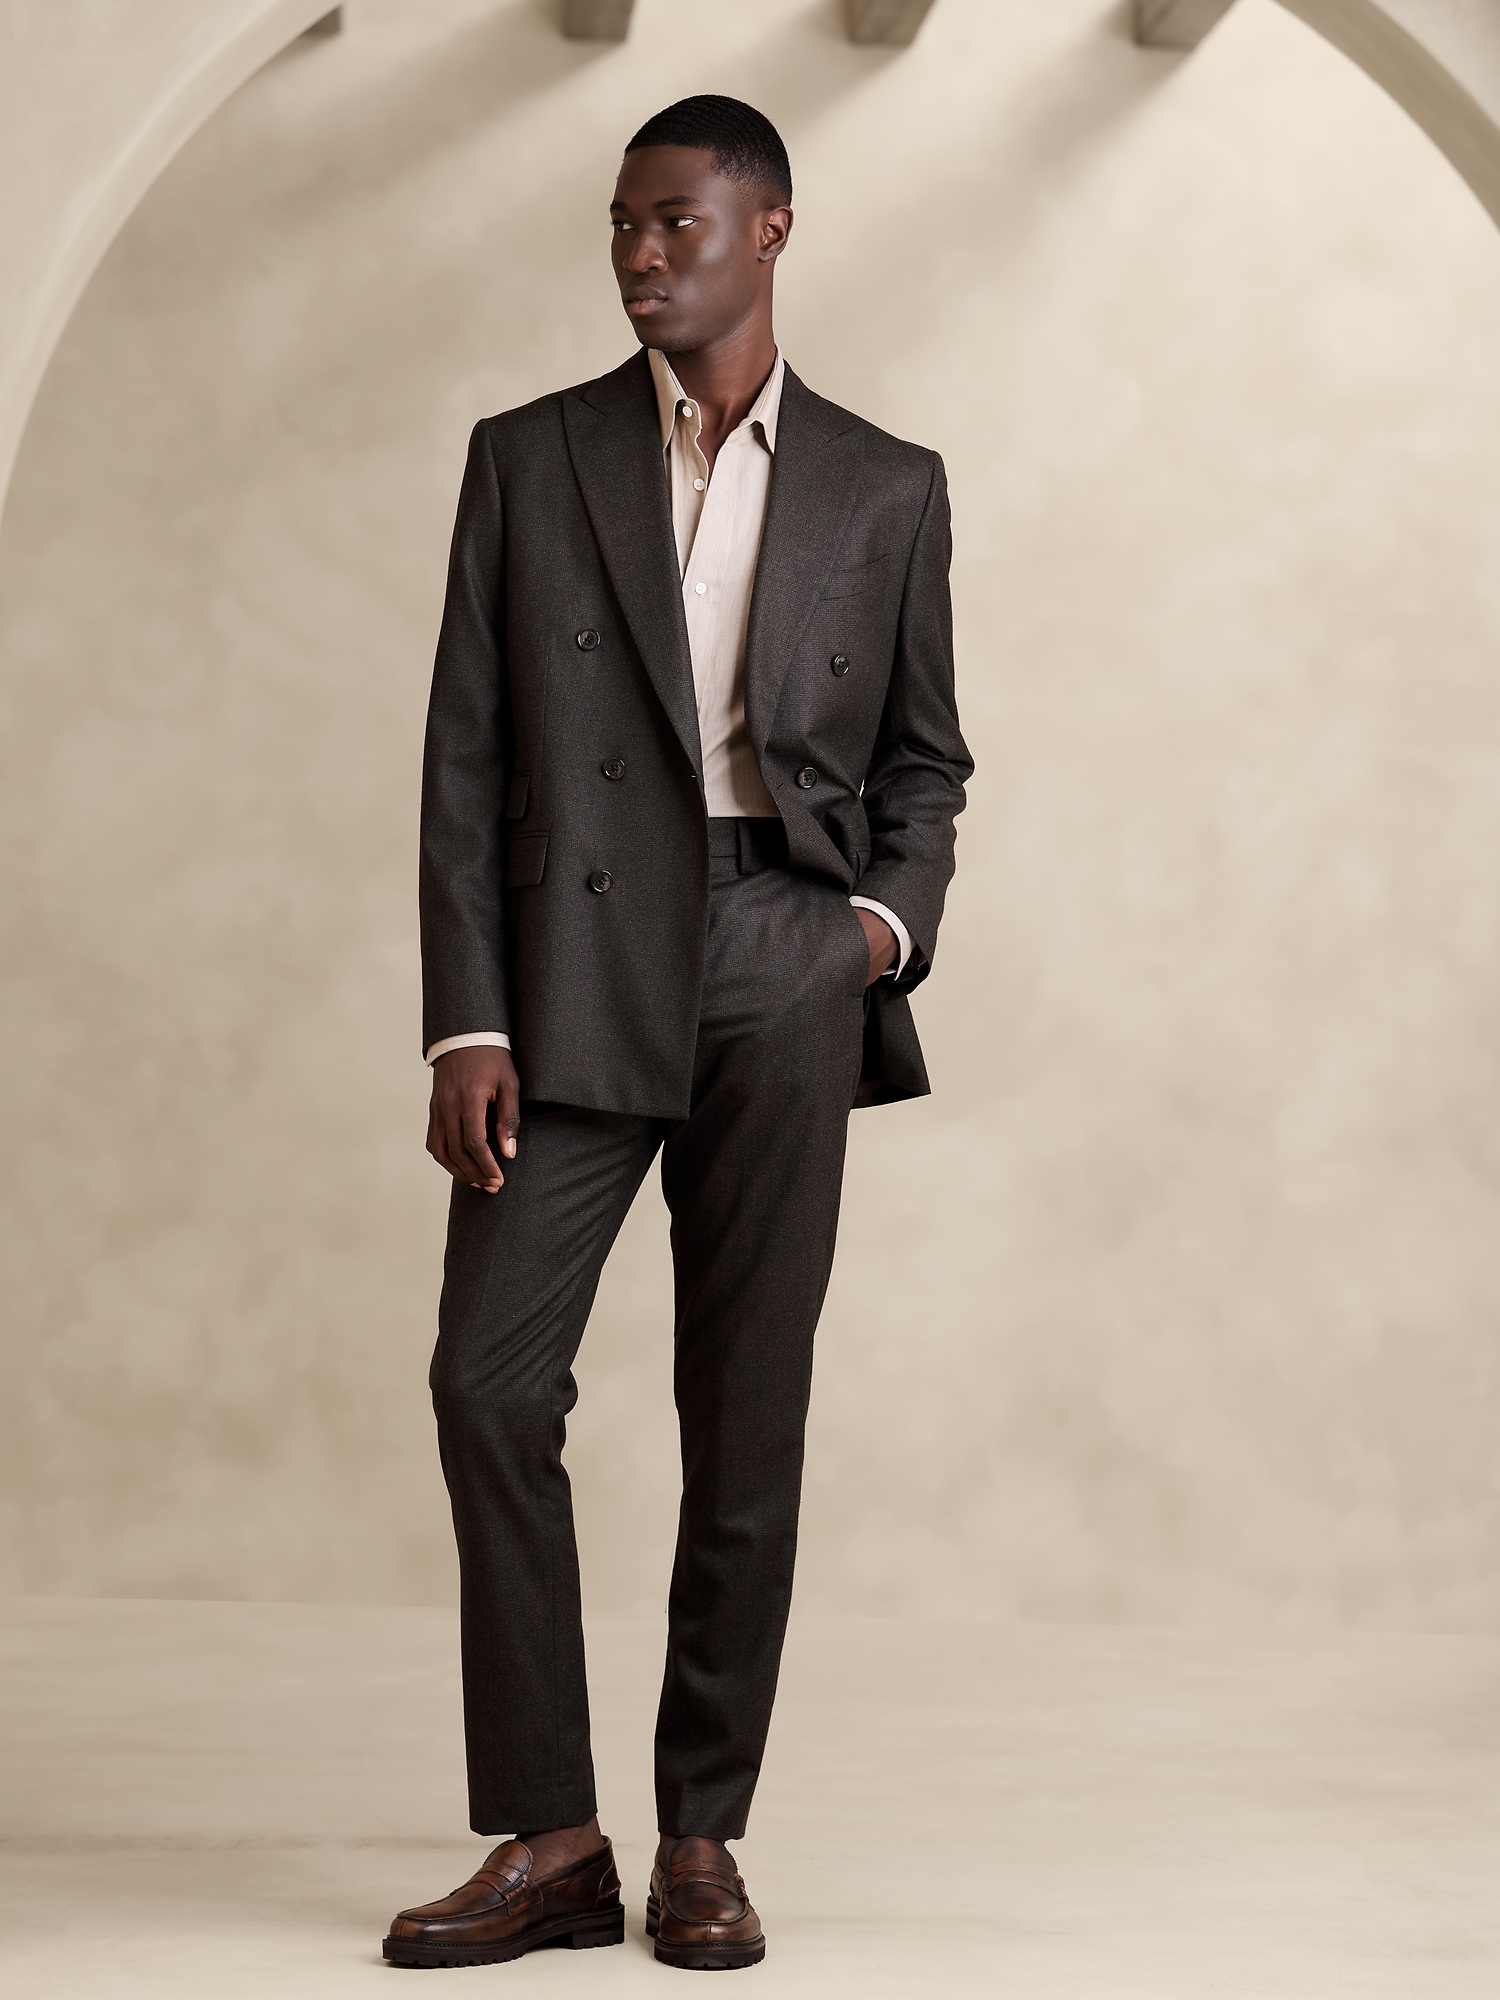 Tall Men's Black Suit Trousers